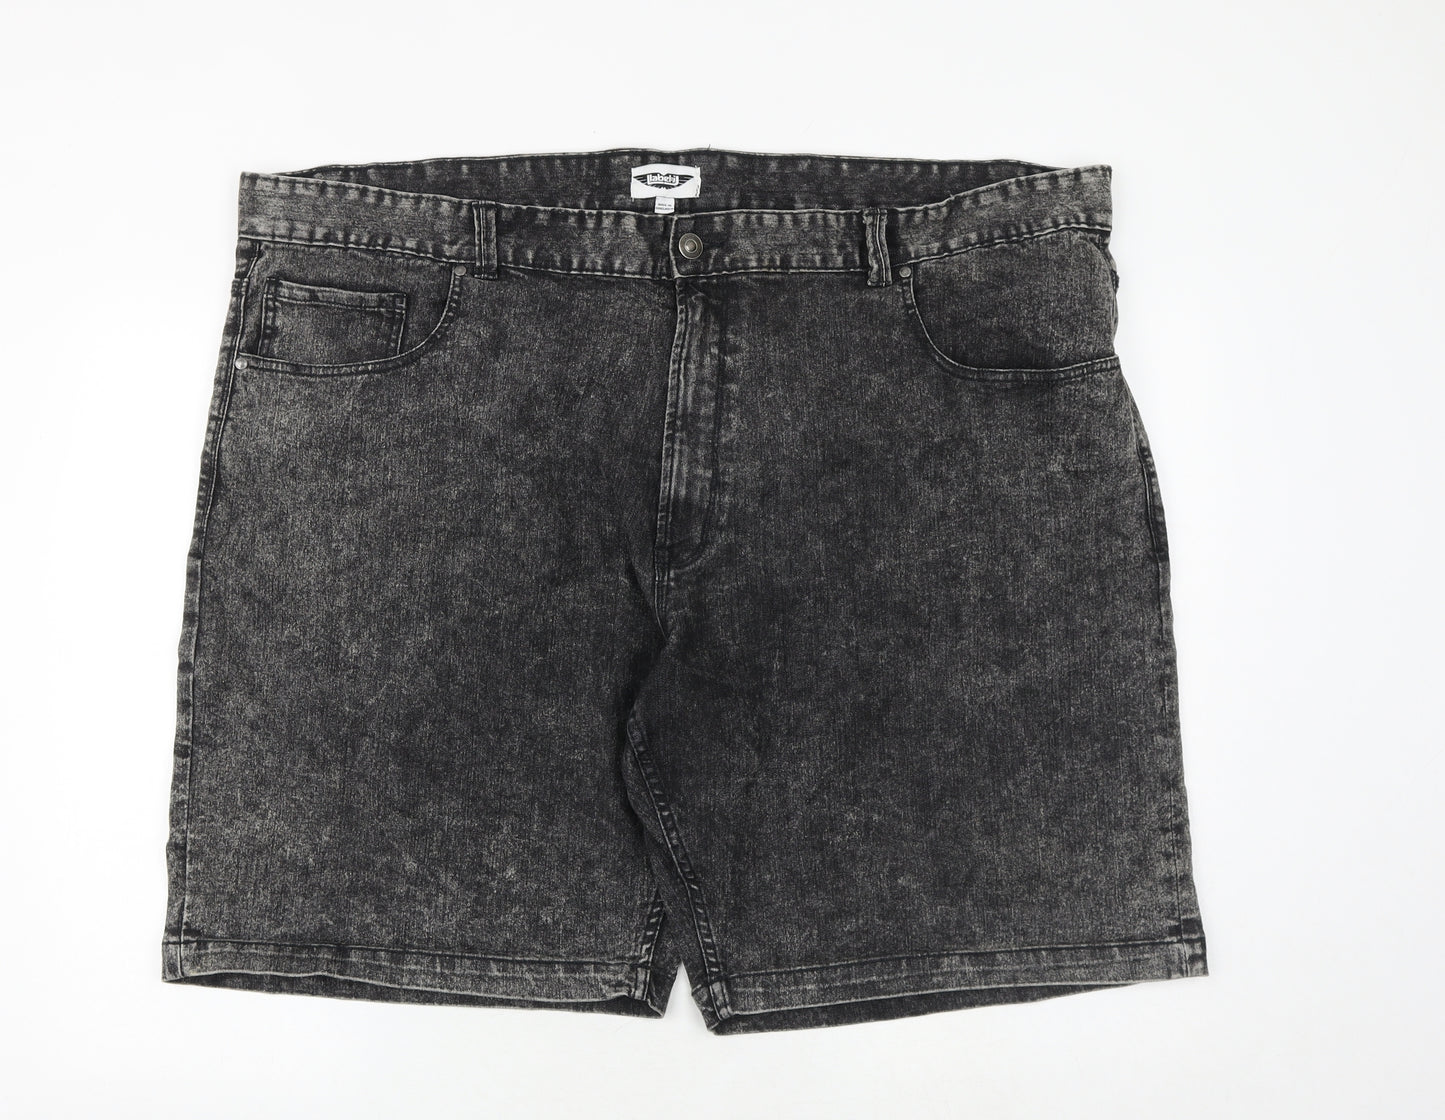 Labelj Mens Grey Cotton Bermuda Shorts Size 50 in Regular Zip